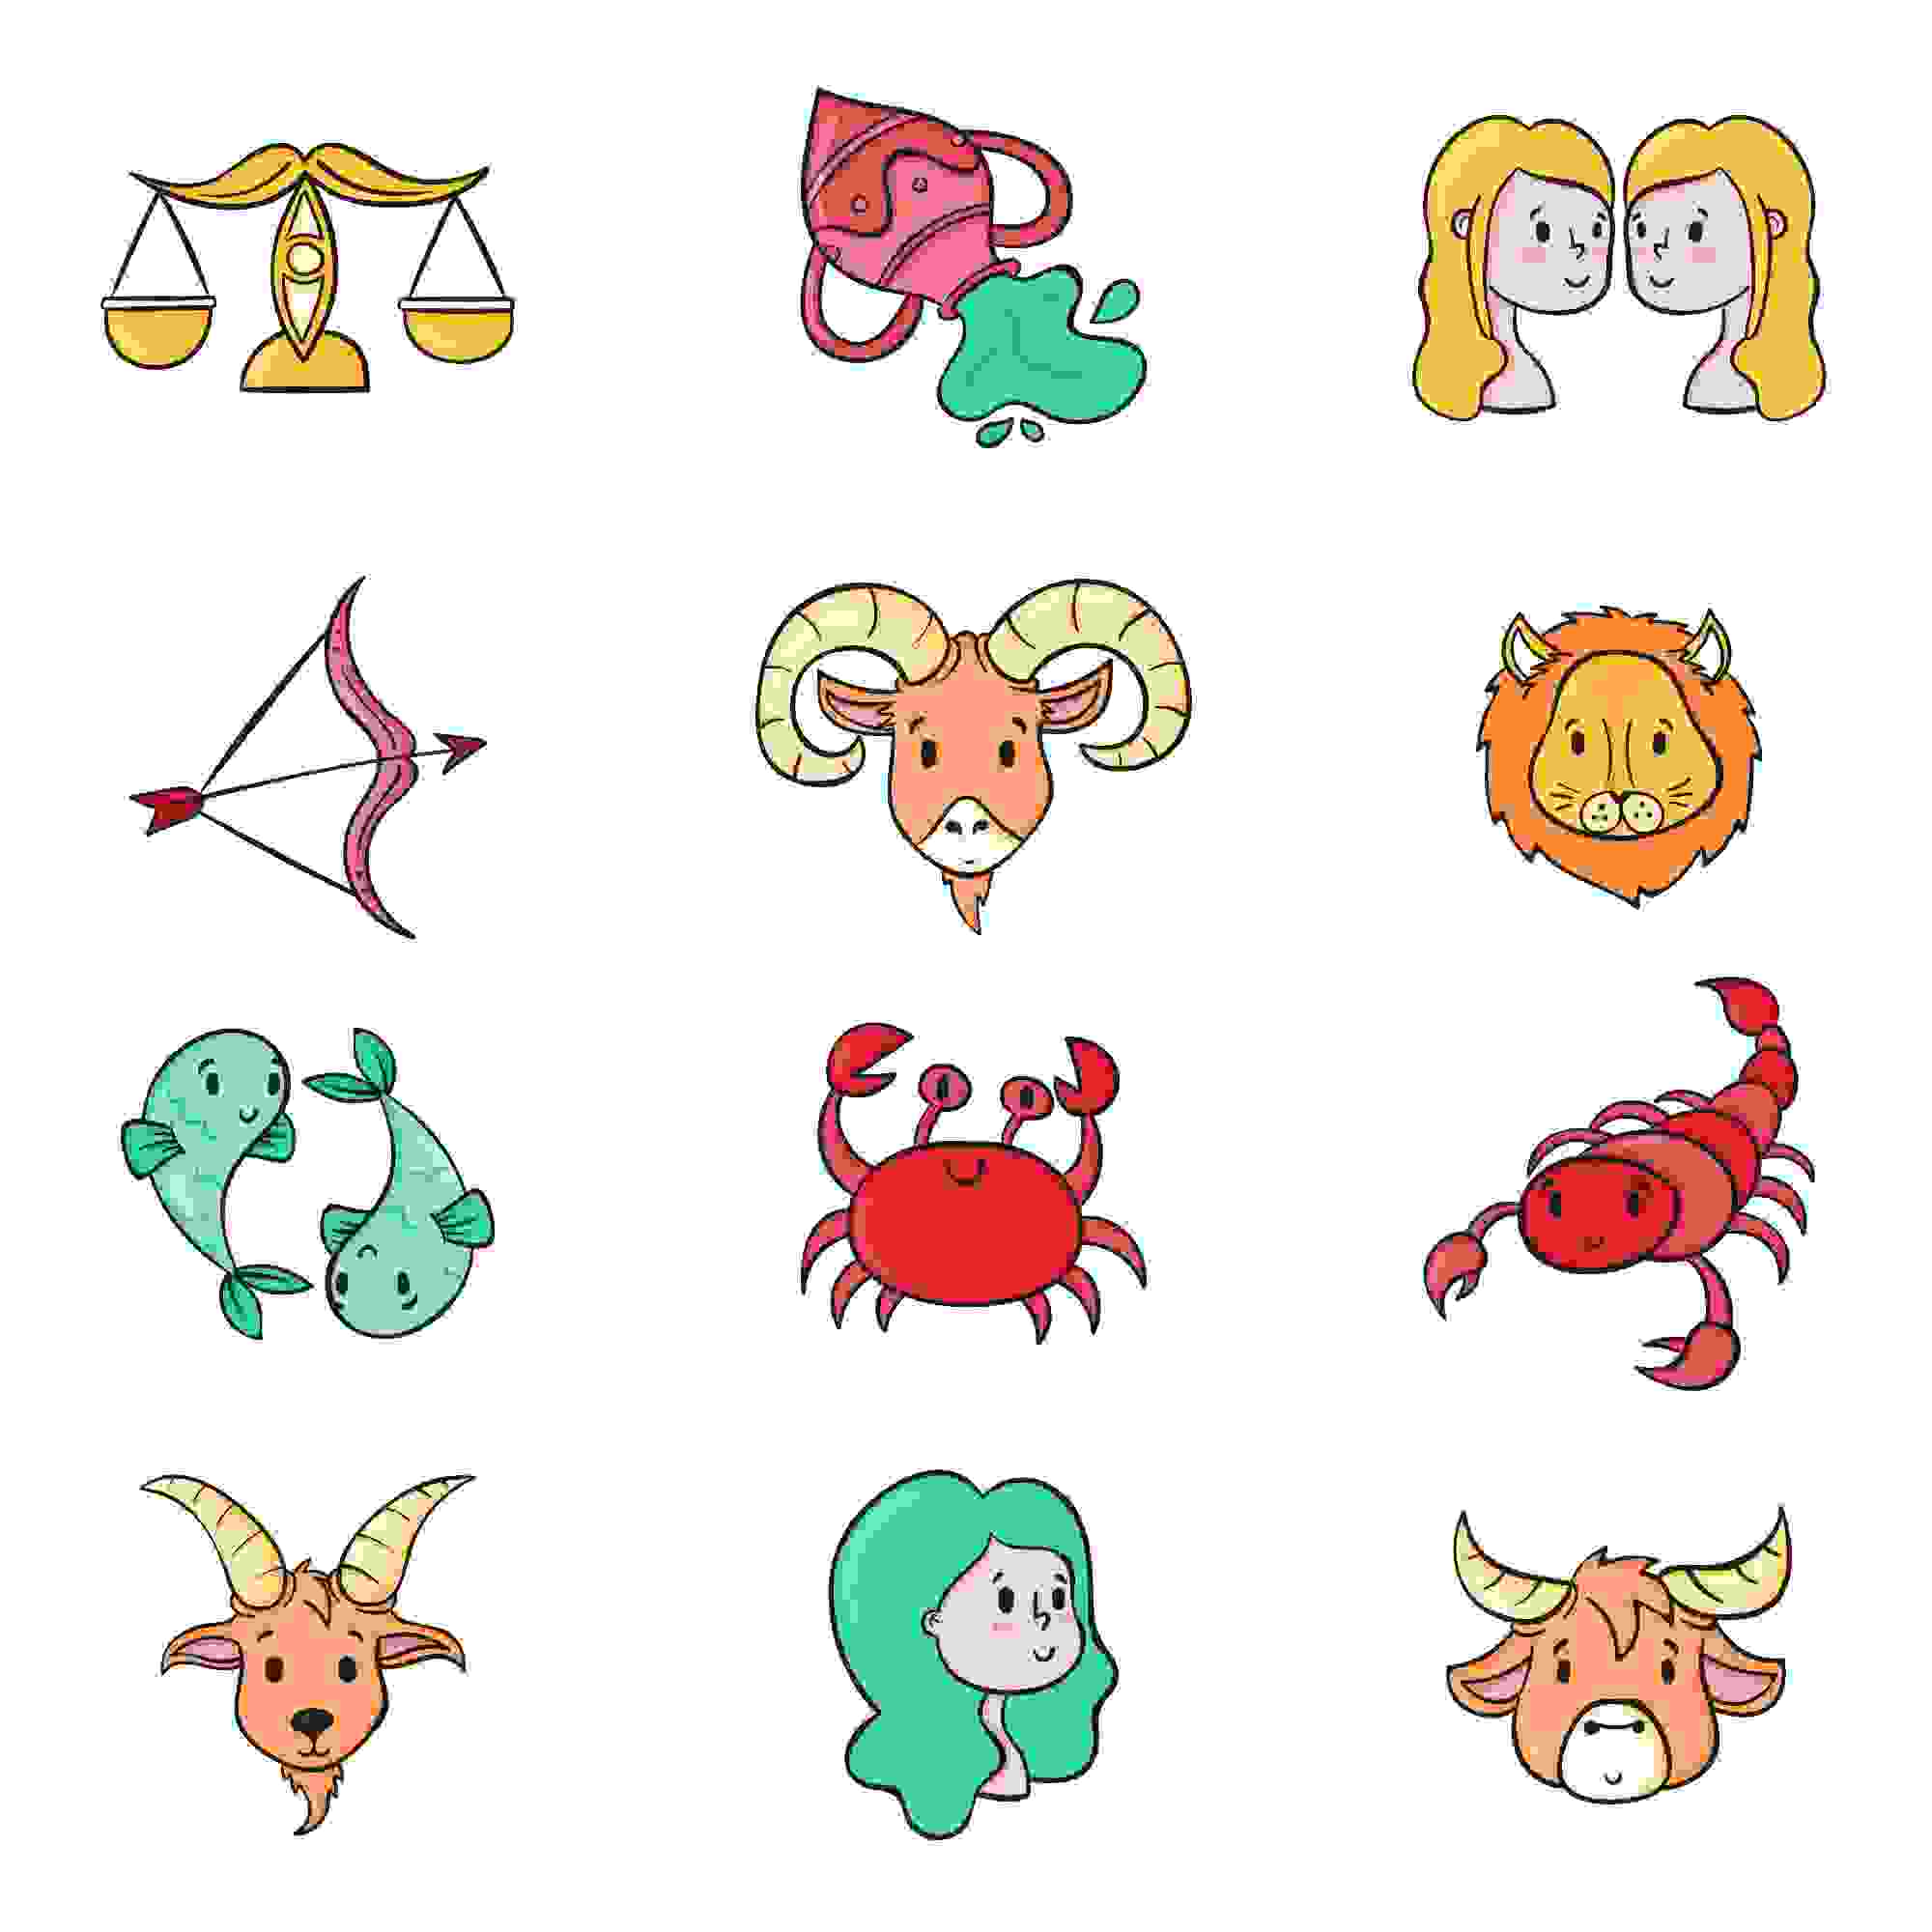 Horoscope signs